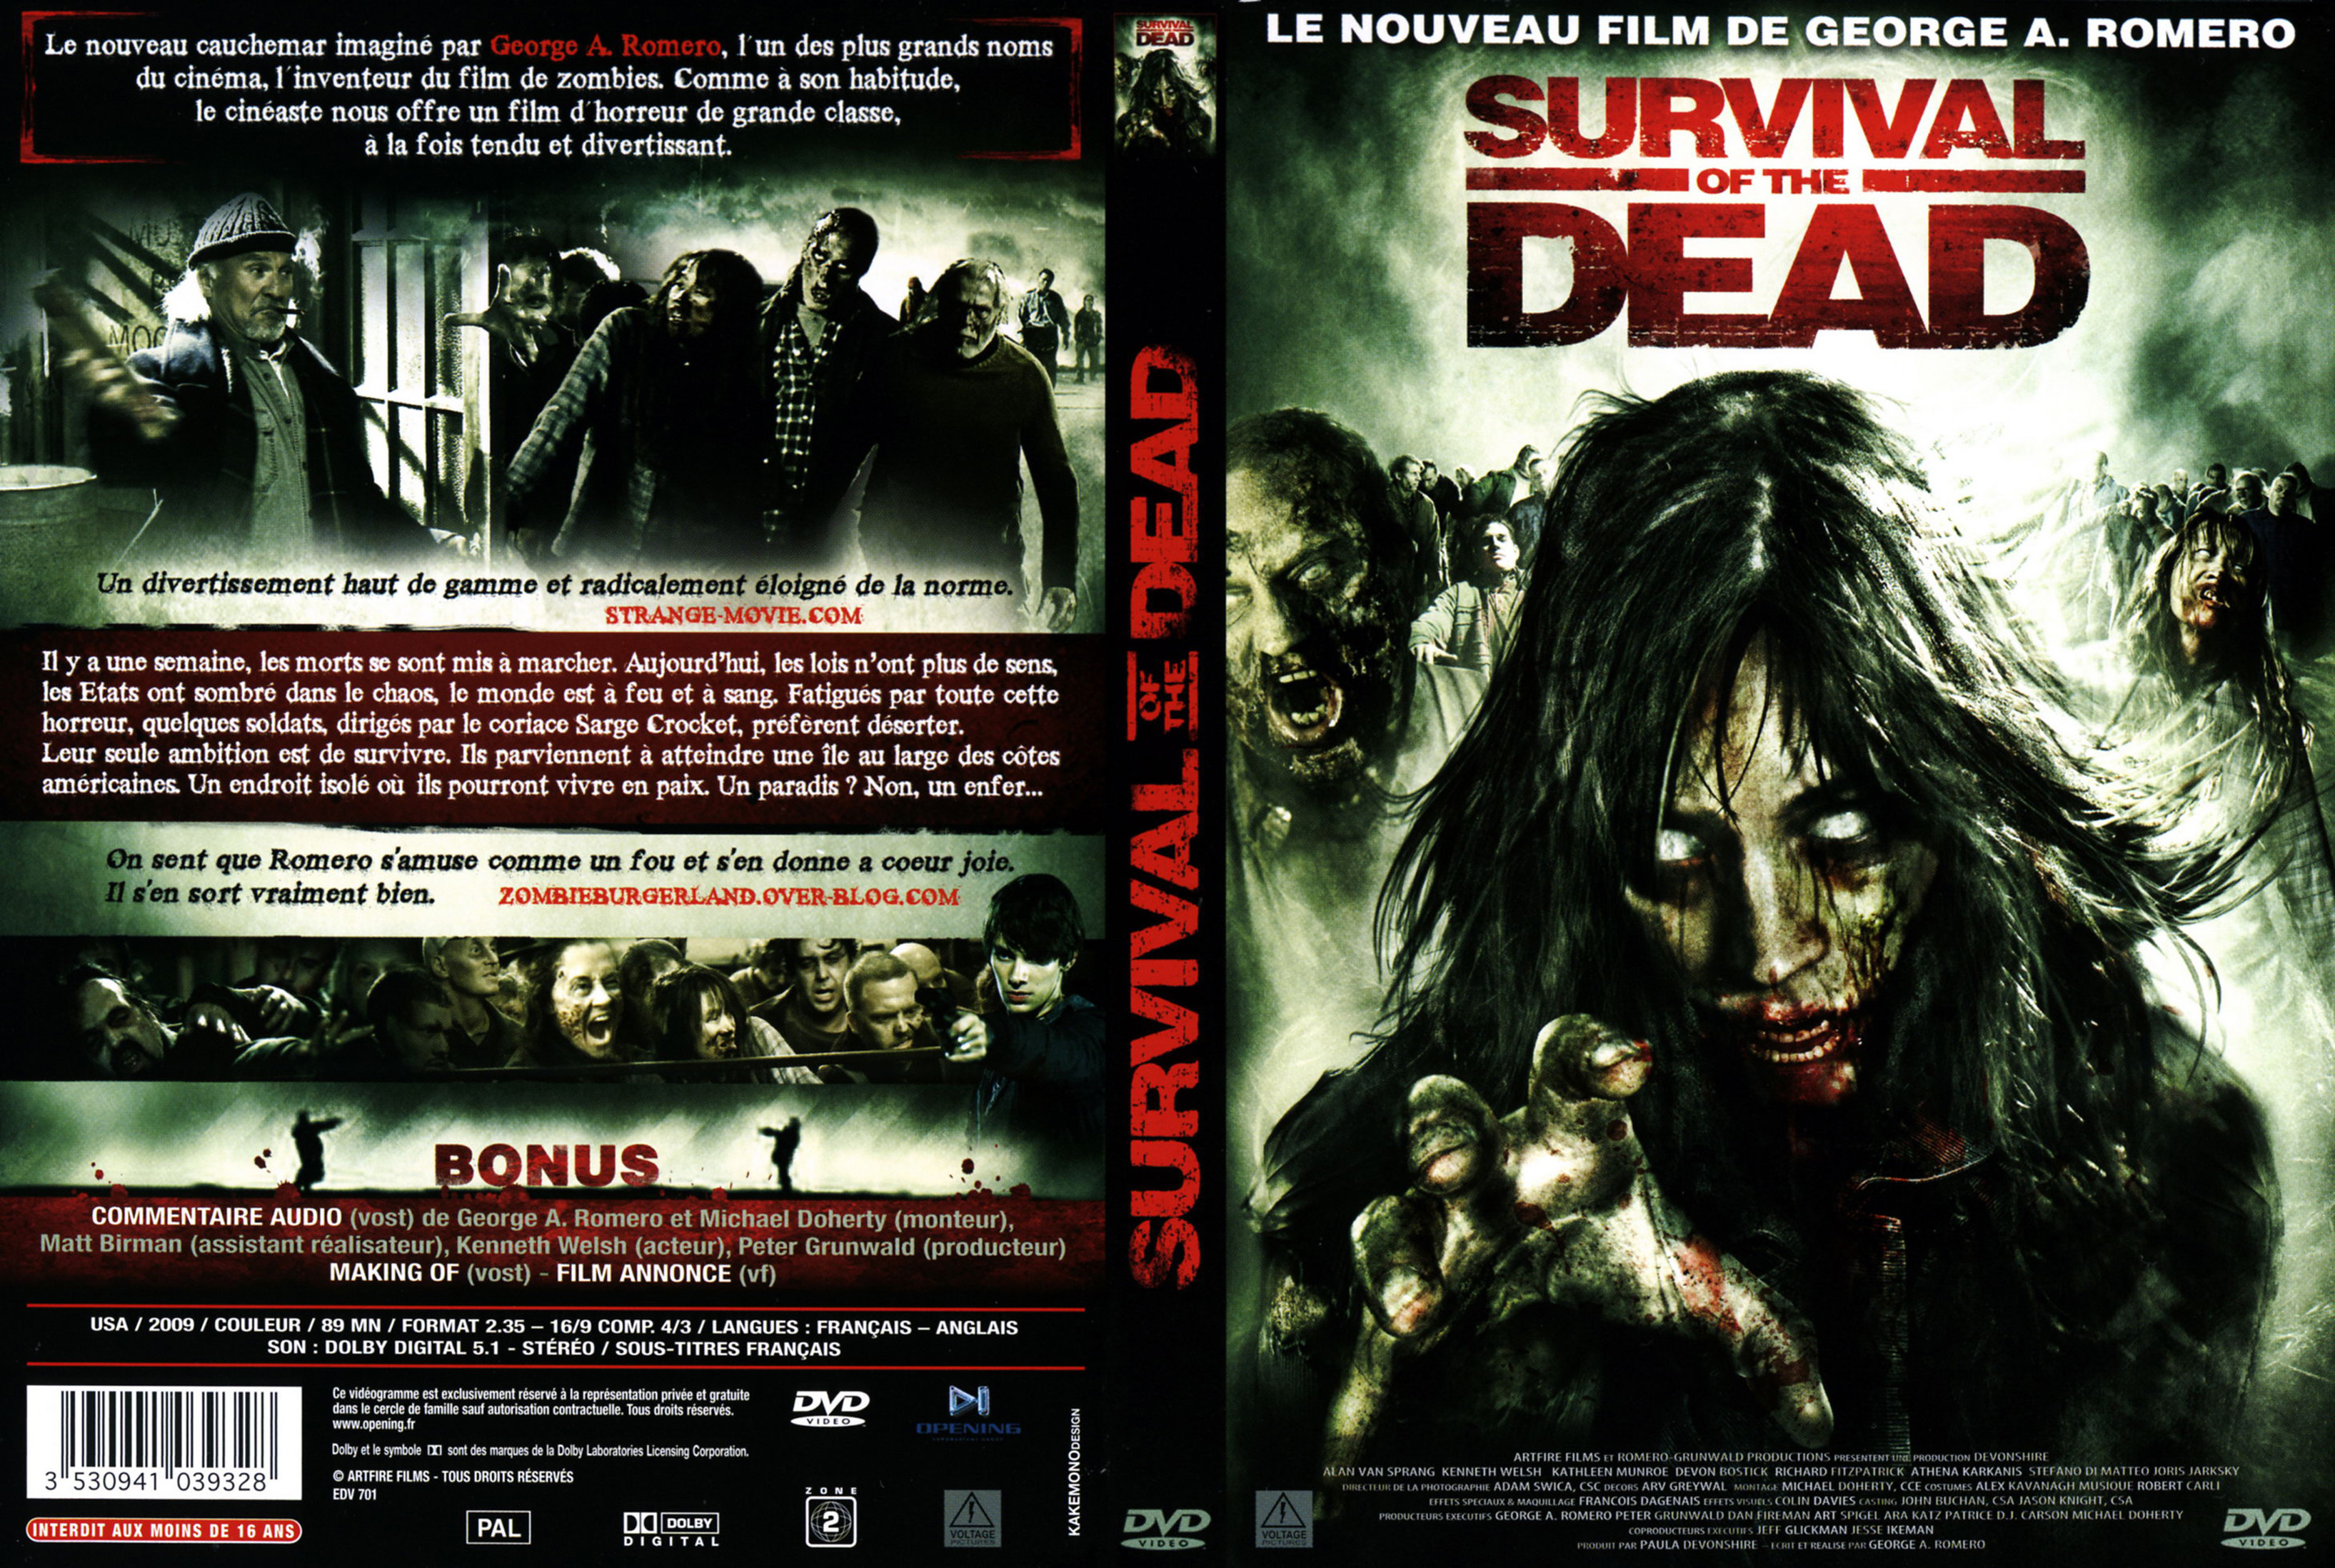 Jaquette DVD Survival of the dead